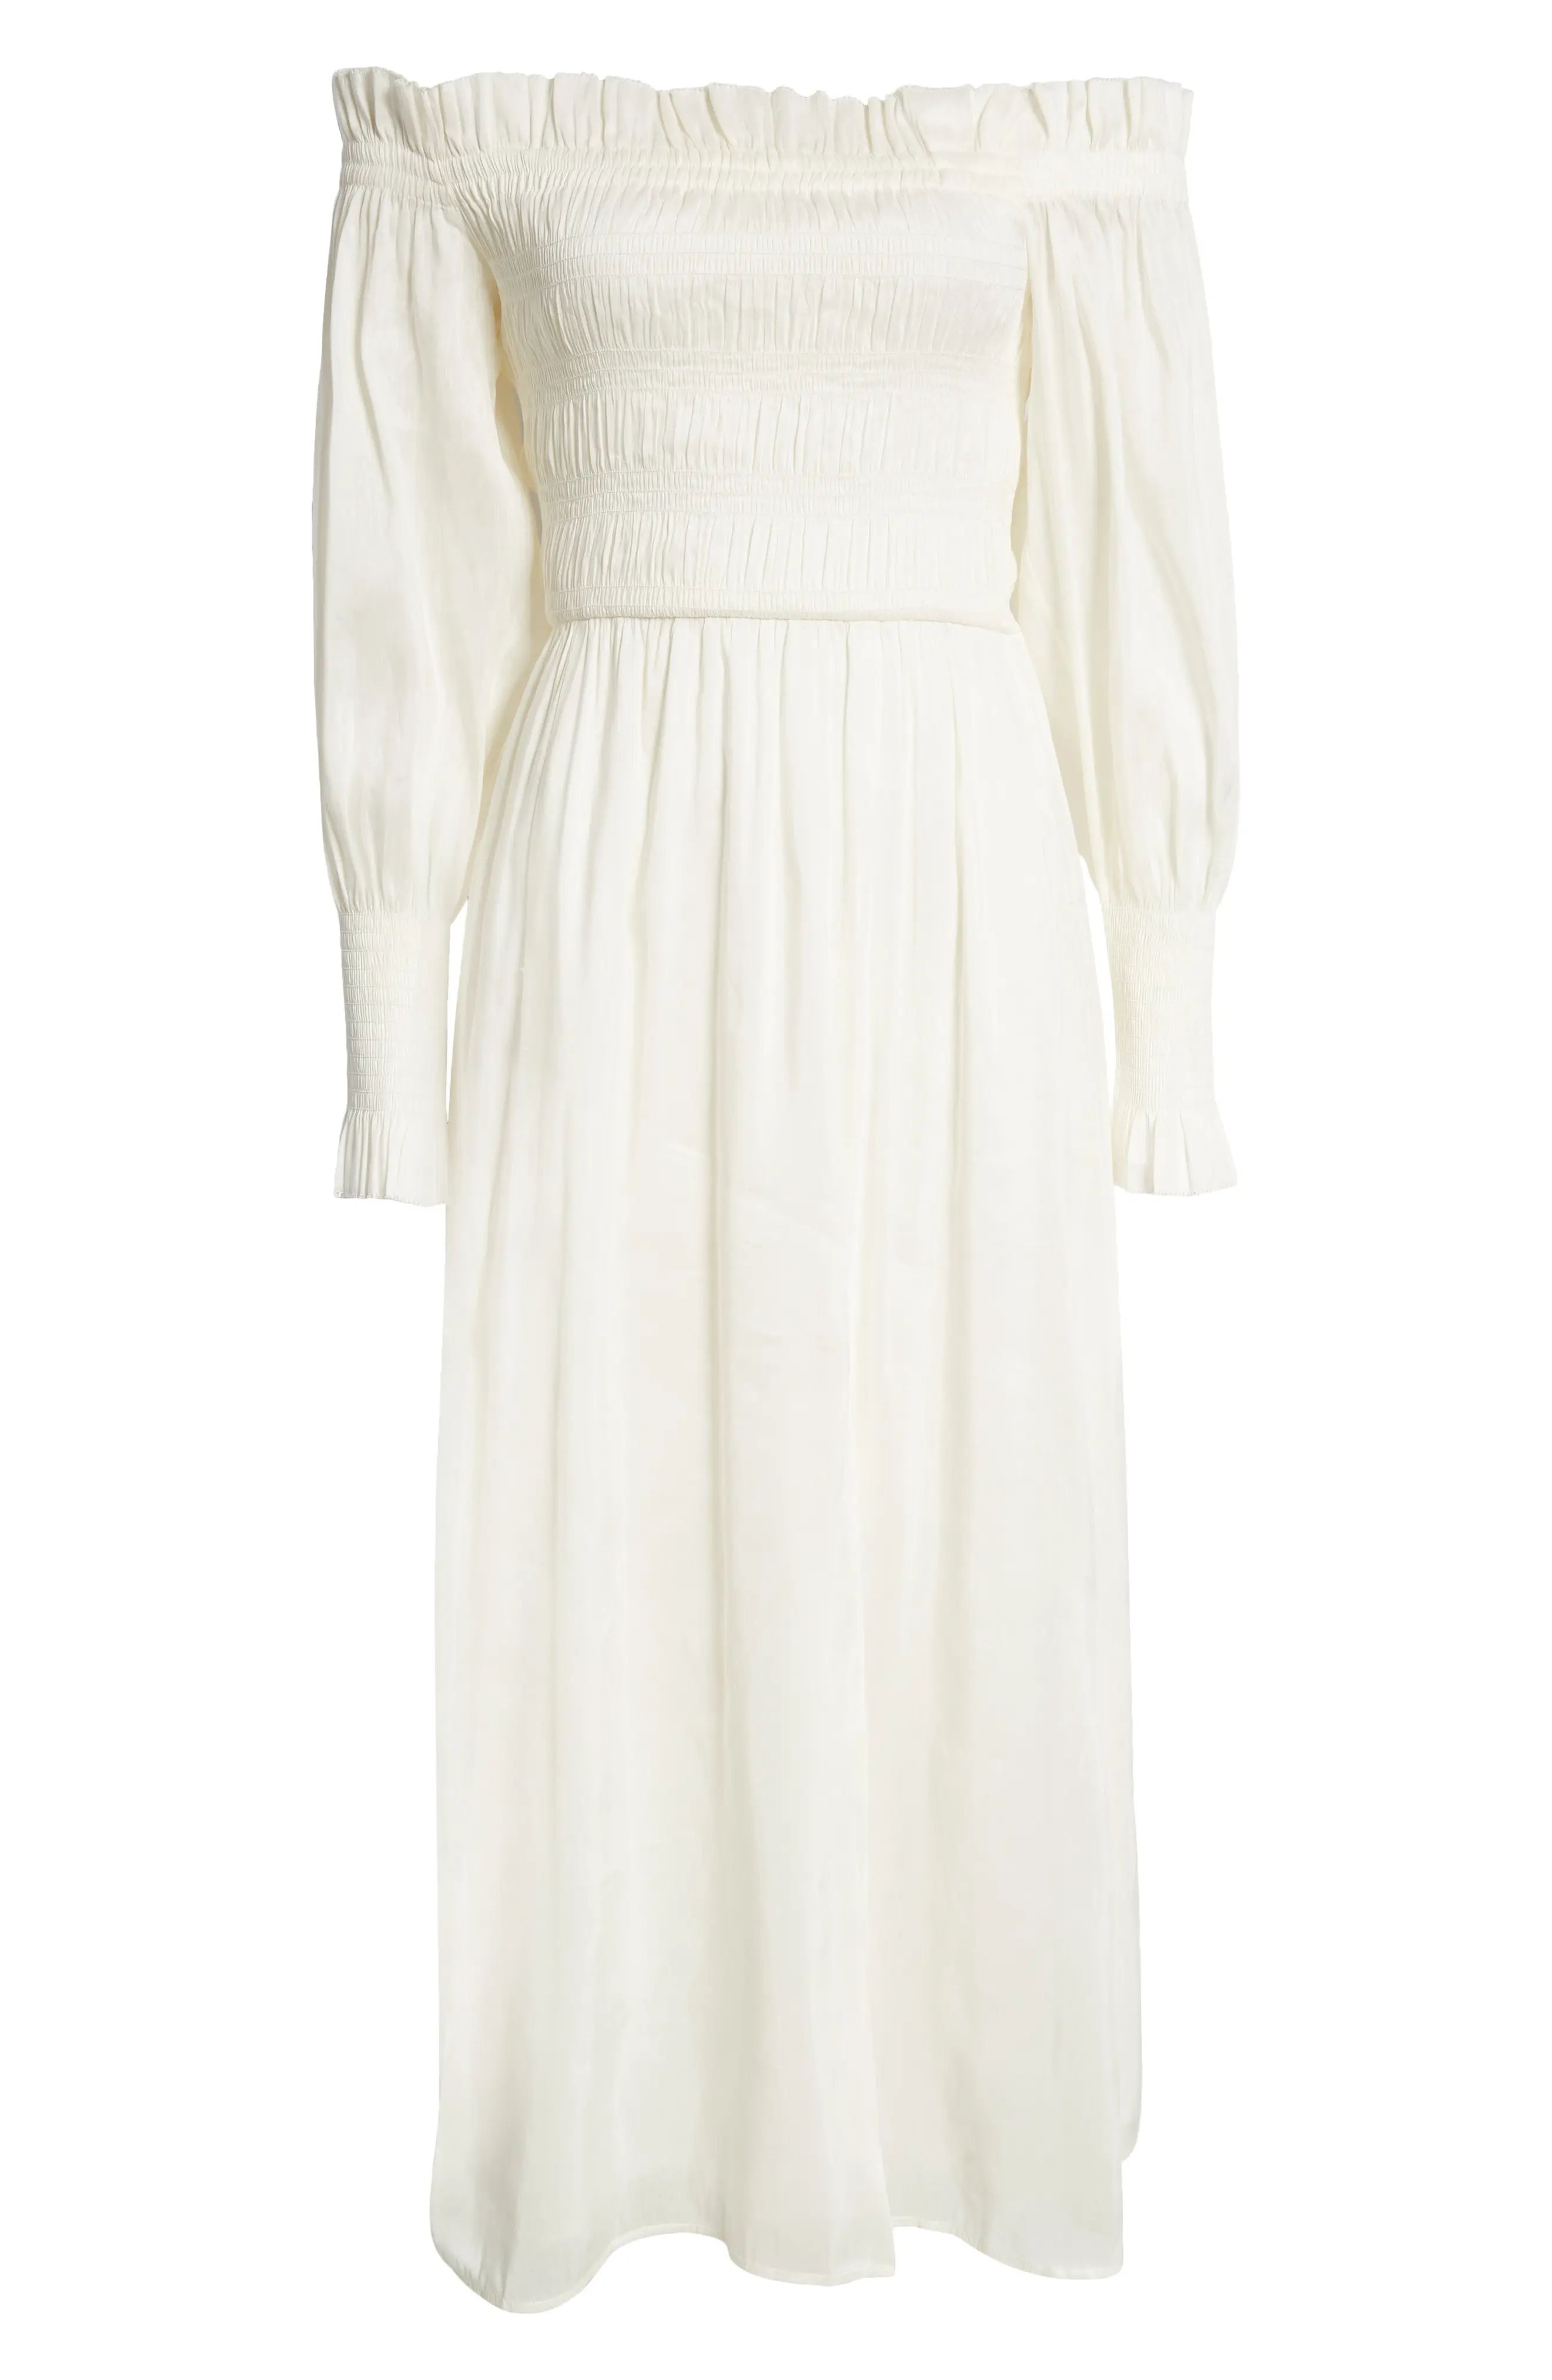 AllSaints Lary Shirred Off the Shoulder Linen & Silk Dress in Chalk White at Nordstrom, Size 2 Us | Nordstrom